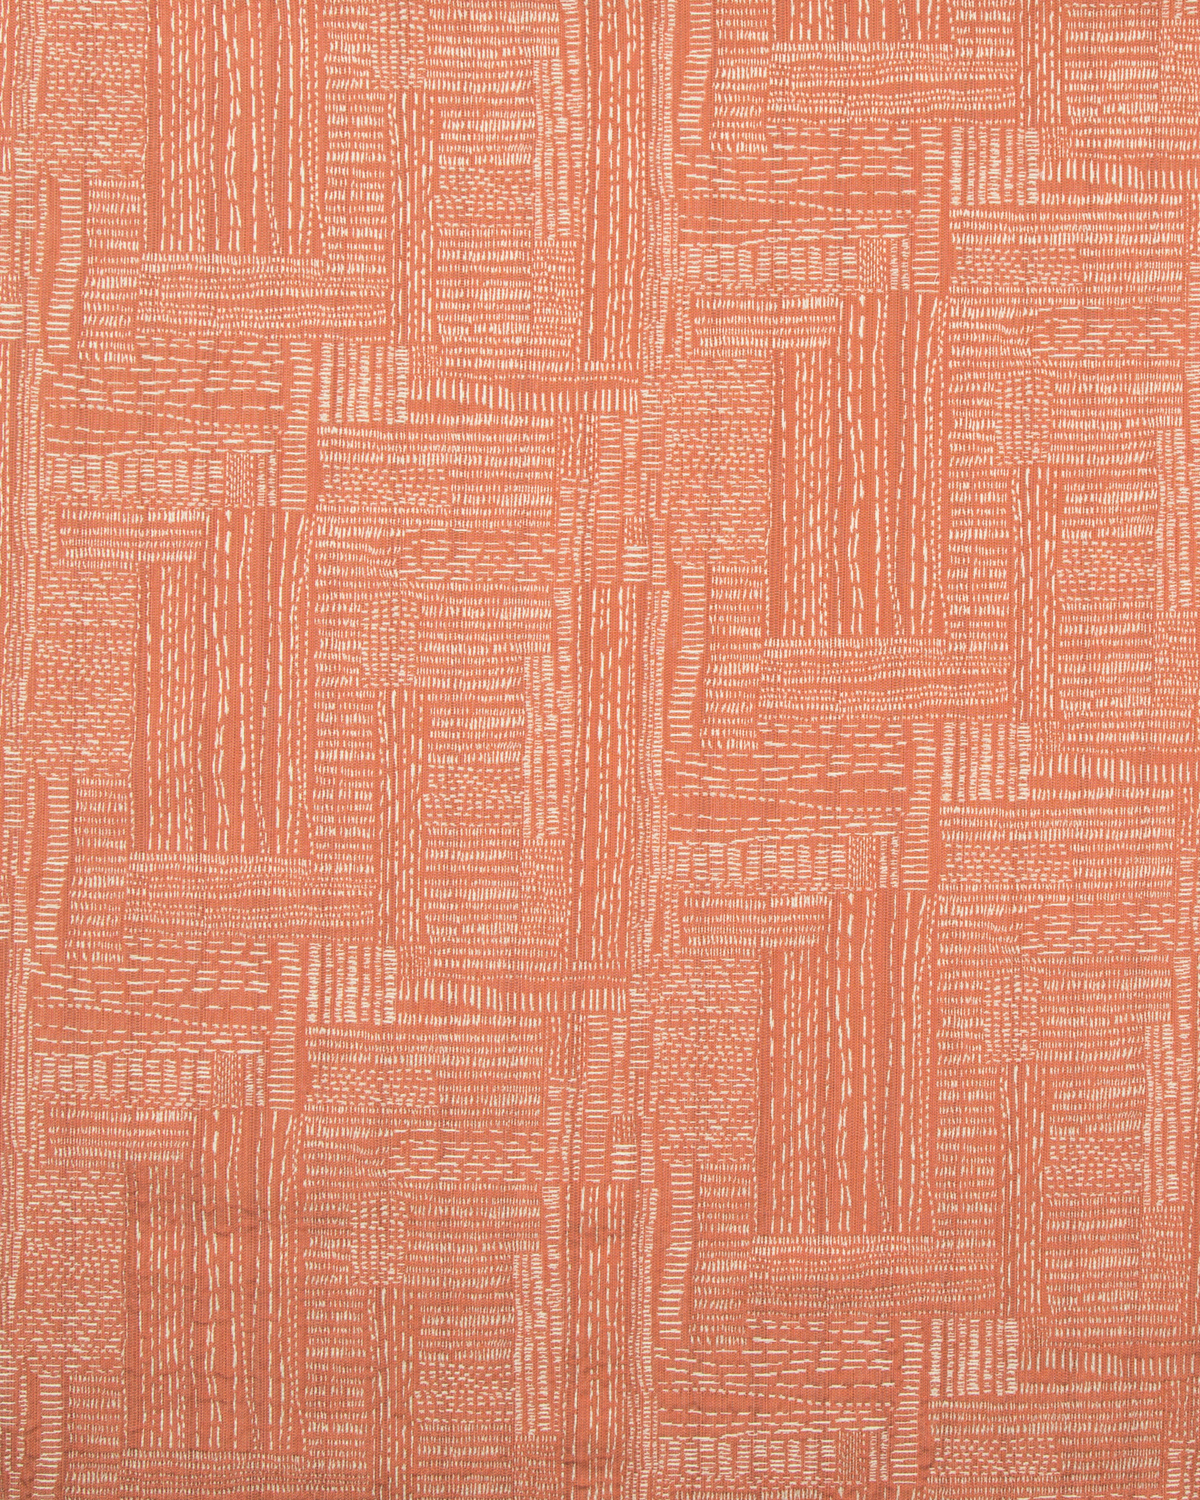 Sashiko Stitch Fabric in Tangerine